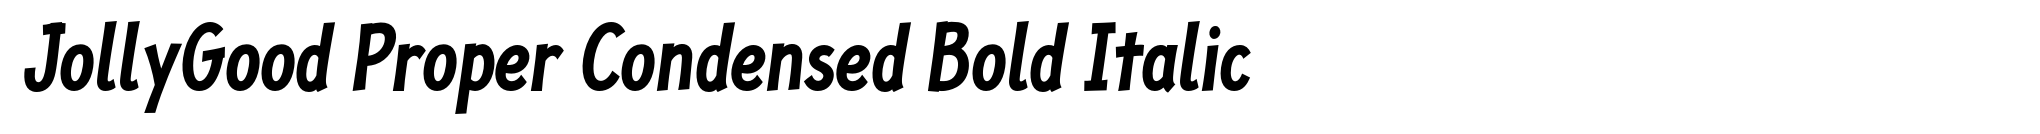 JollyGood Proper Condensed Bold Italic image